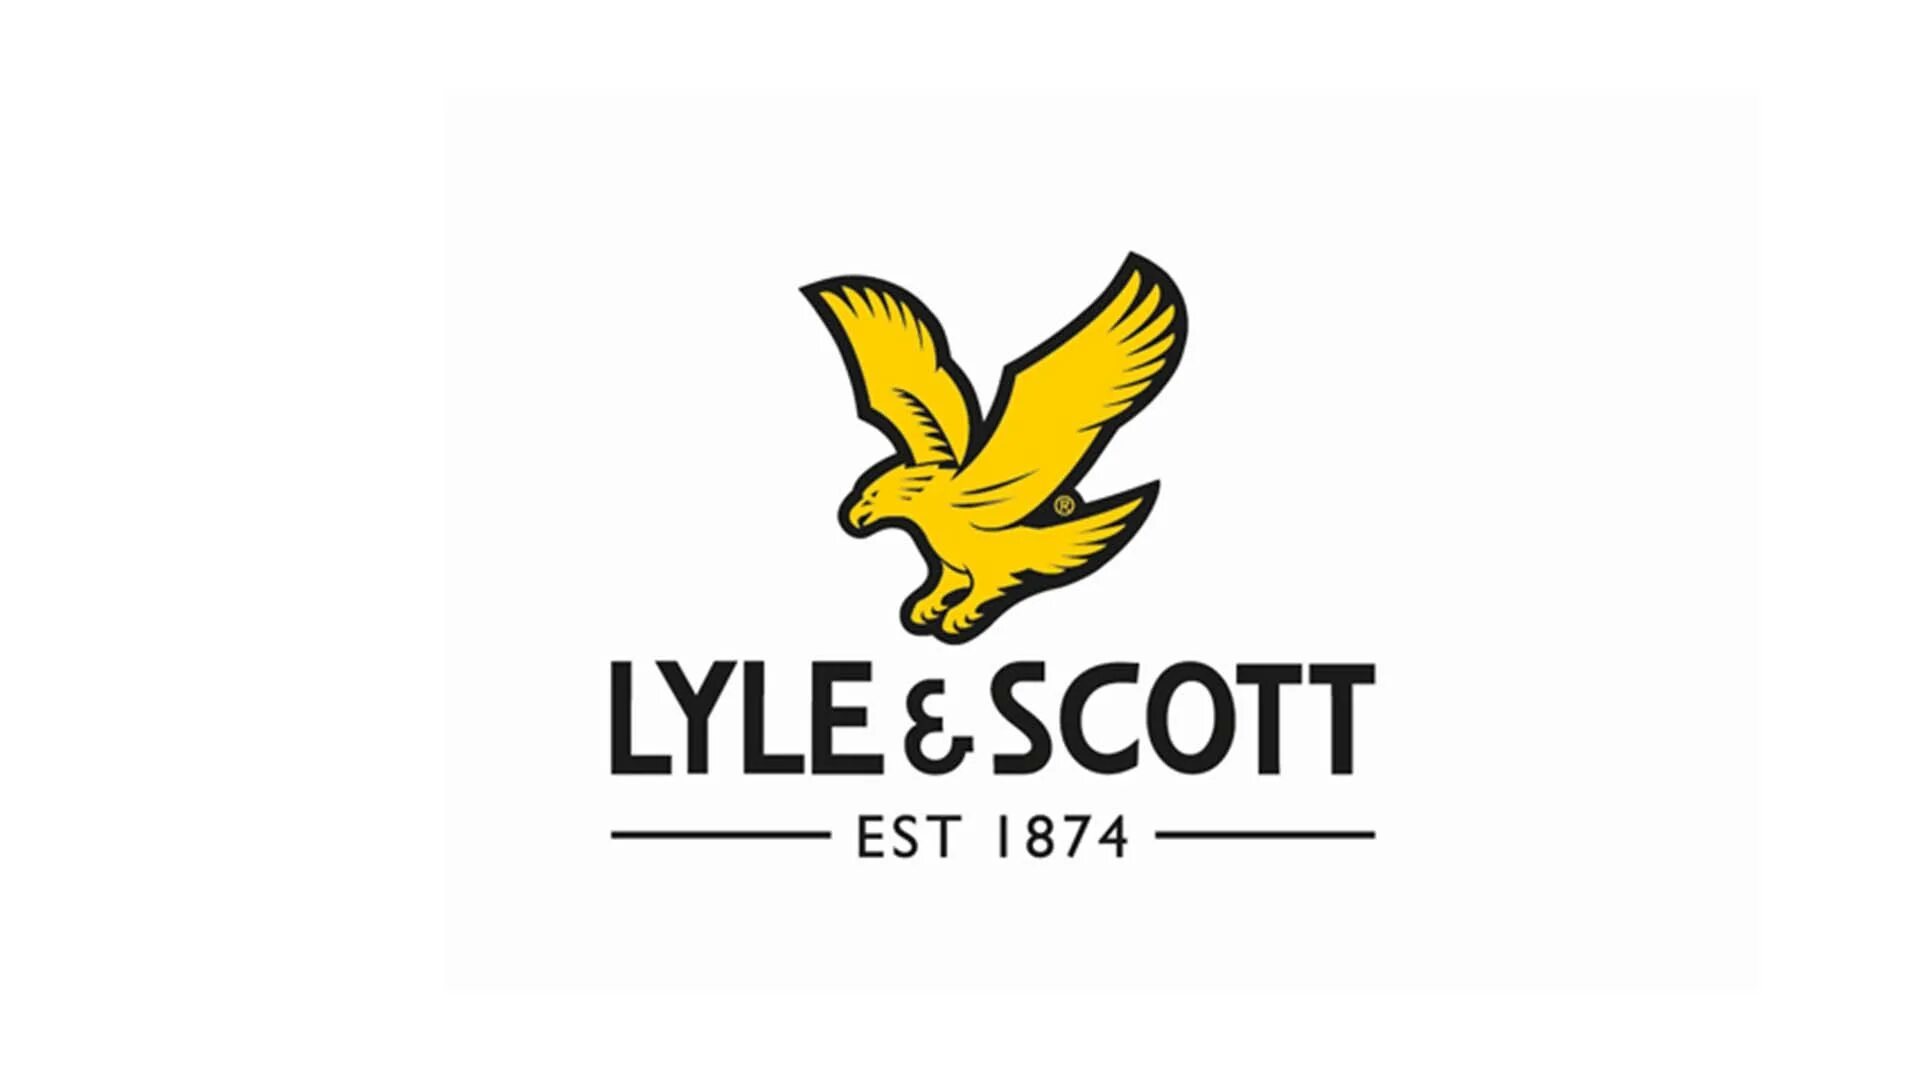 Лил скот. Значок Lyle Scott. Логотип Лайл скот. Lyle Scott обои. Бренд с орлом на логотипе.